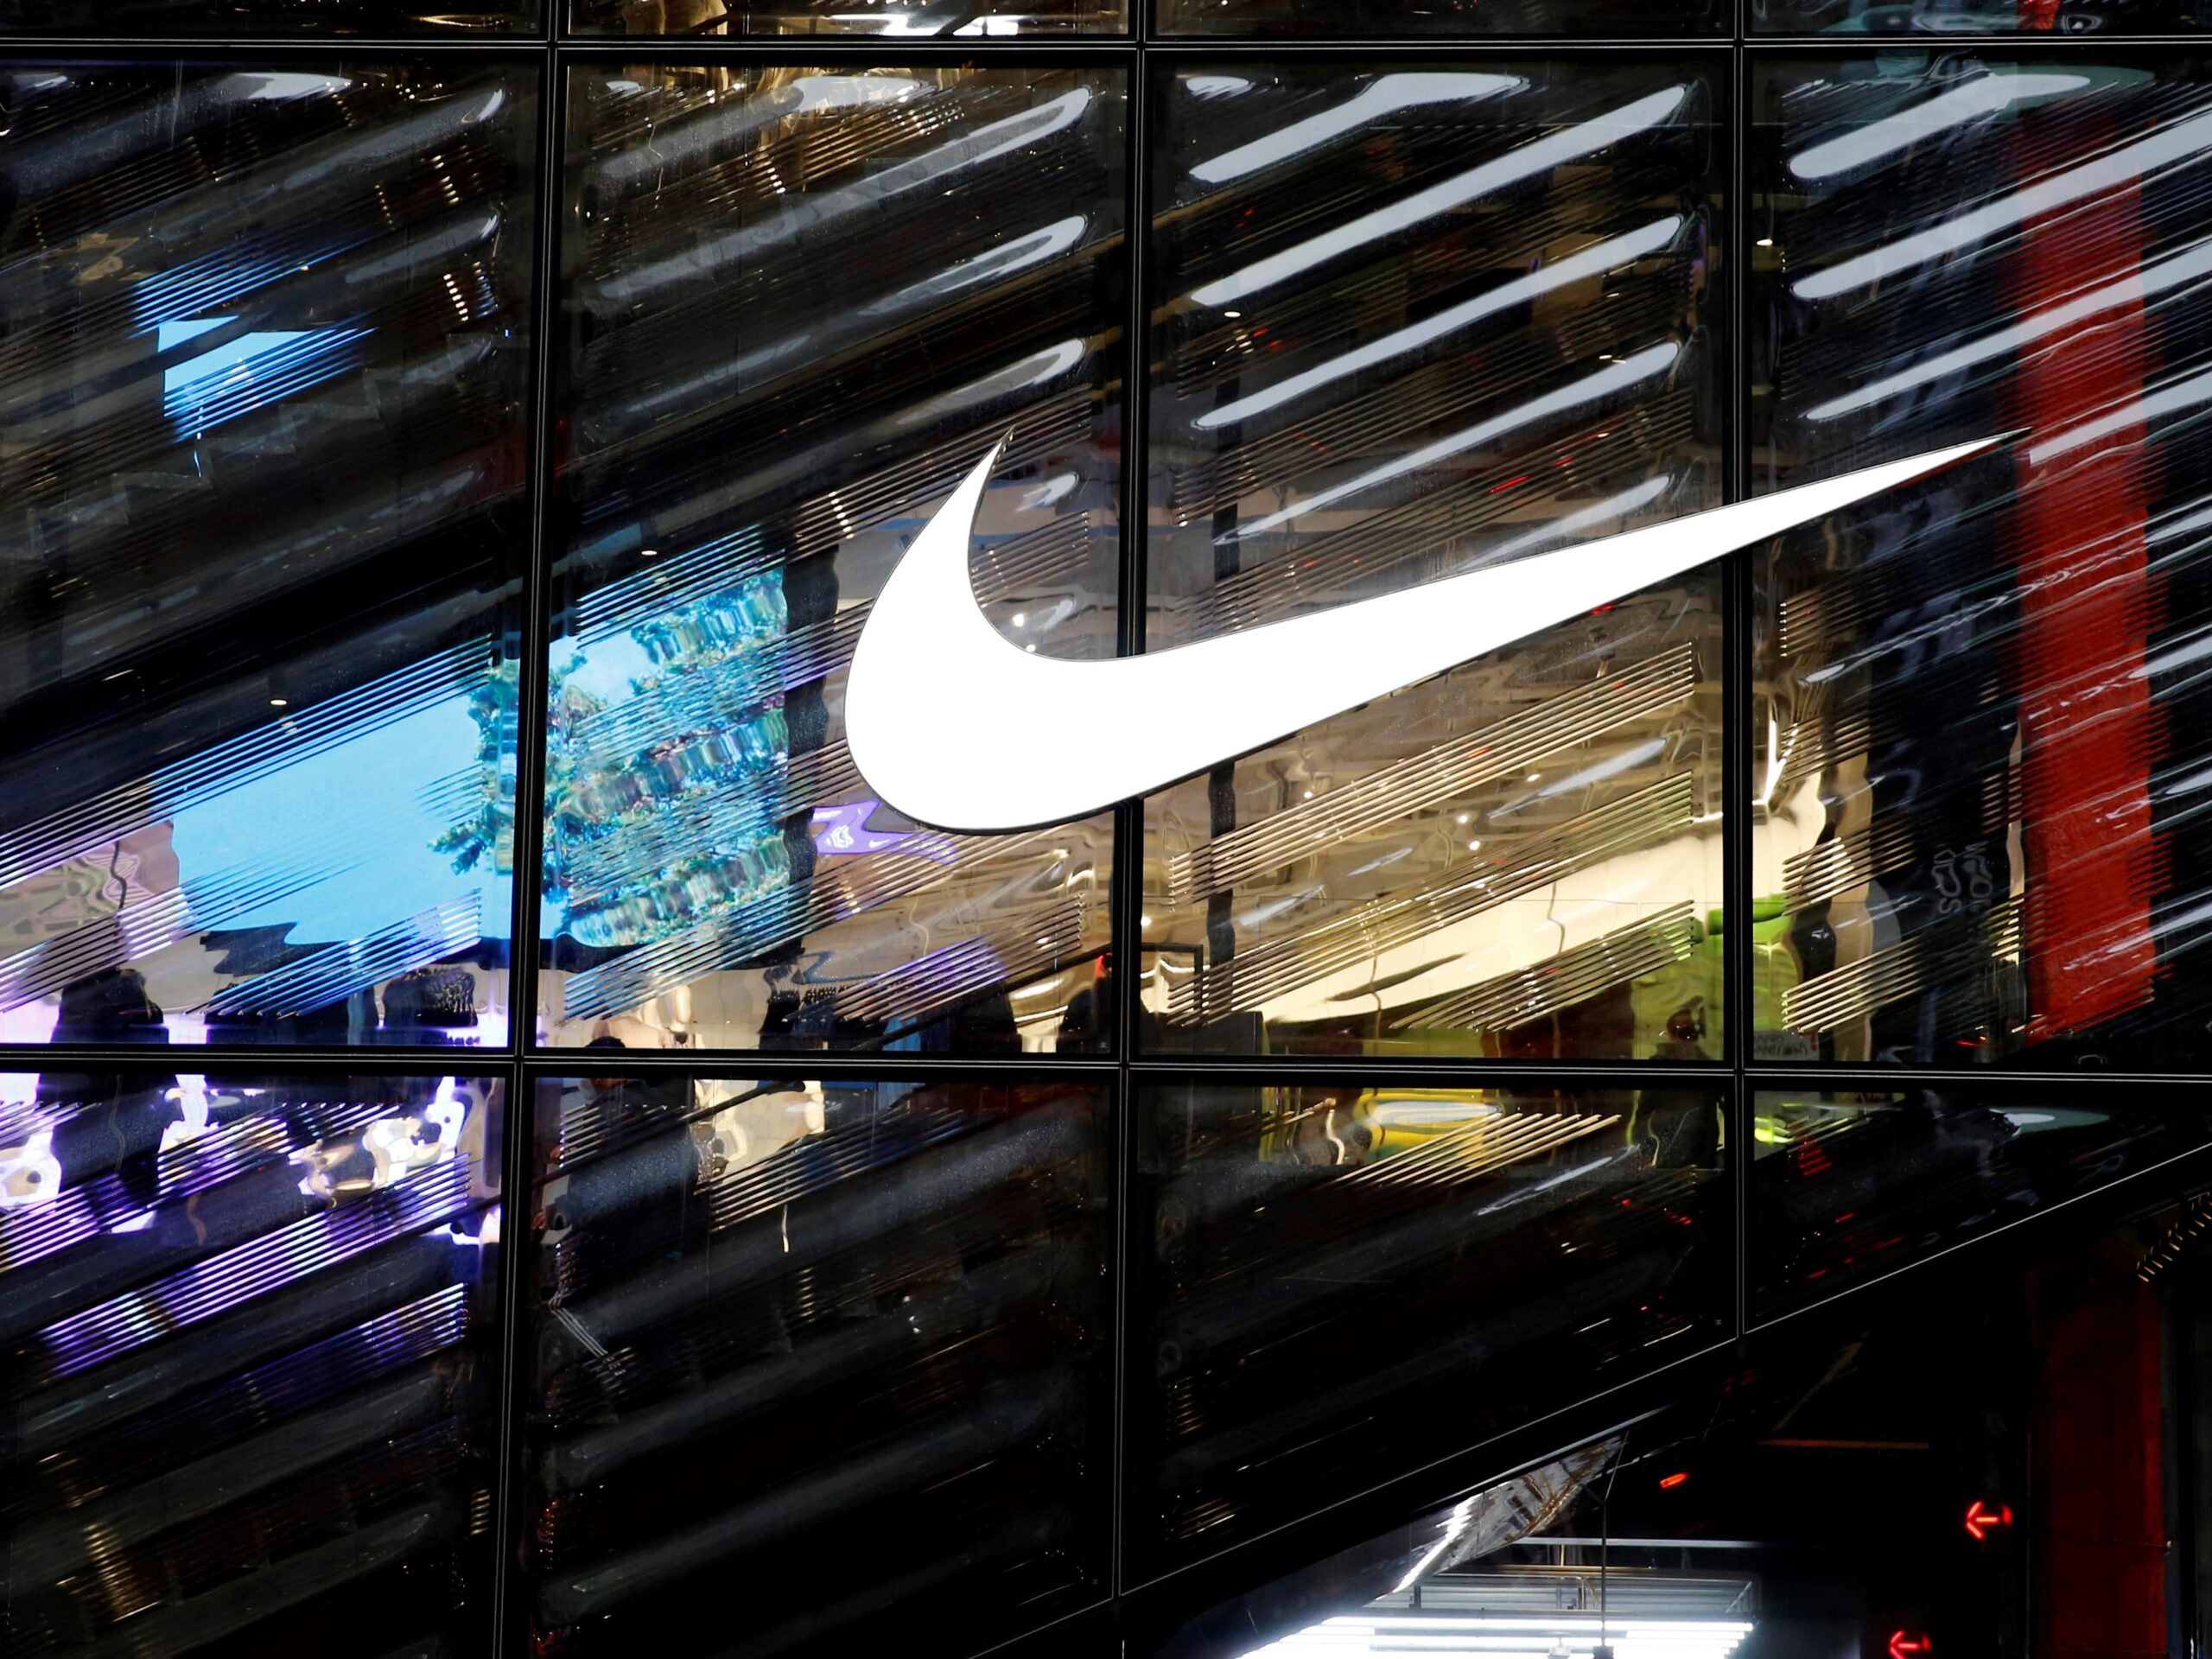 Akcie Nike